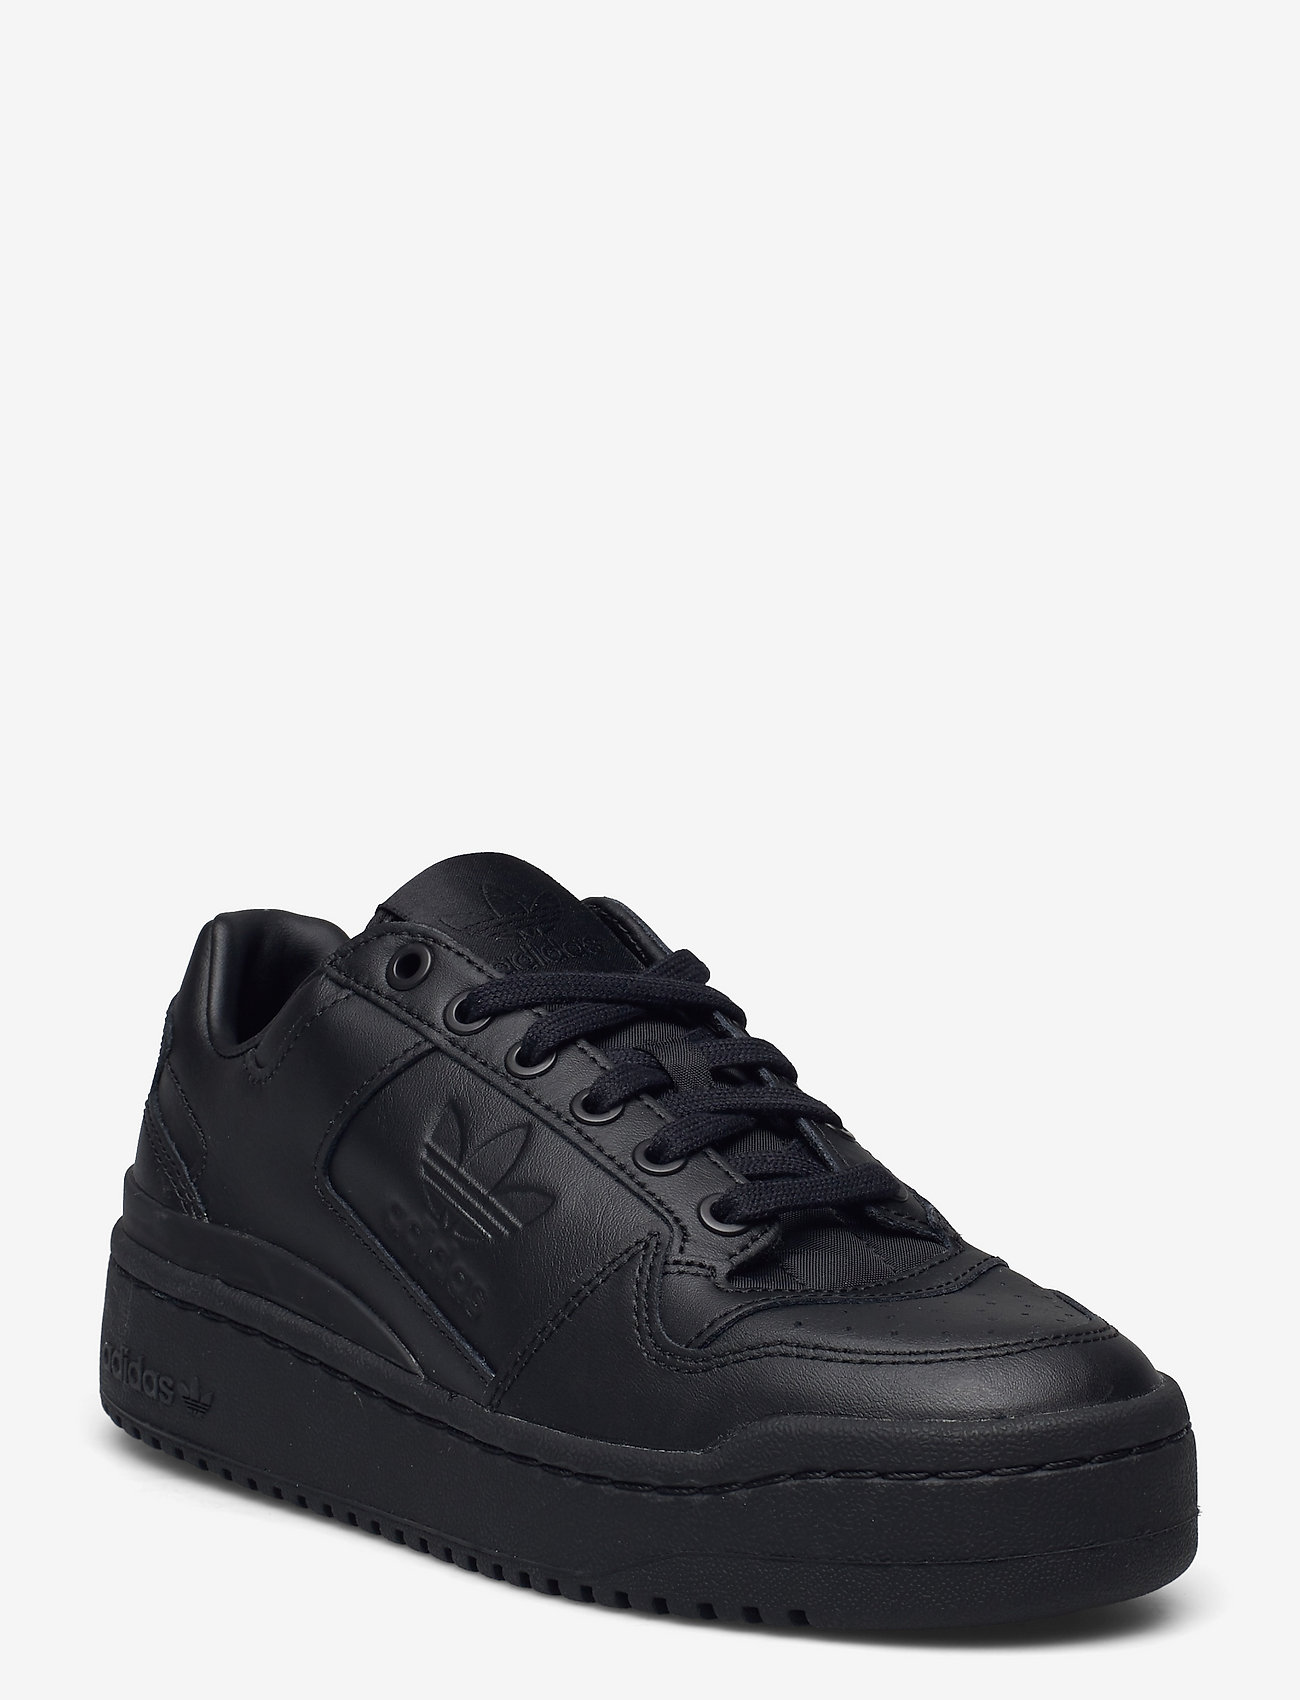 adidas Originals - FORUM BOLD SHOES - sneakers - cblack/cblack/ftwwht - 0